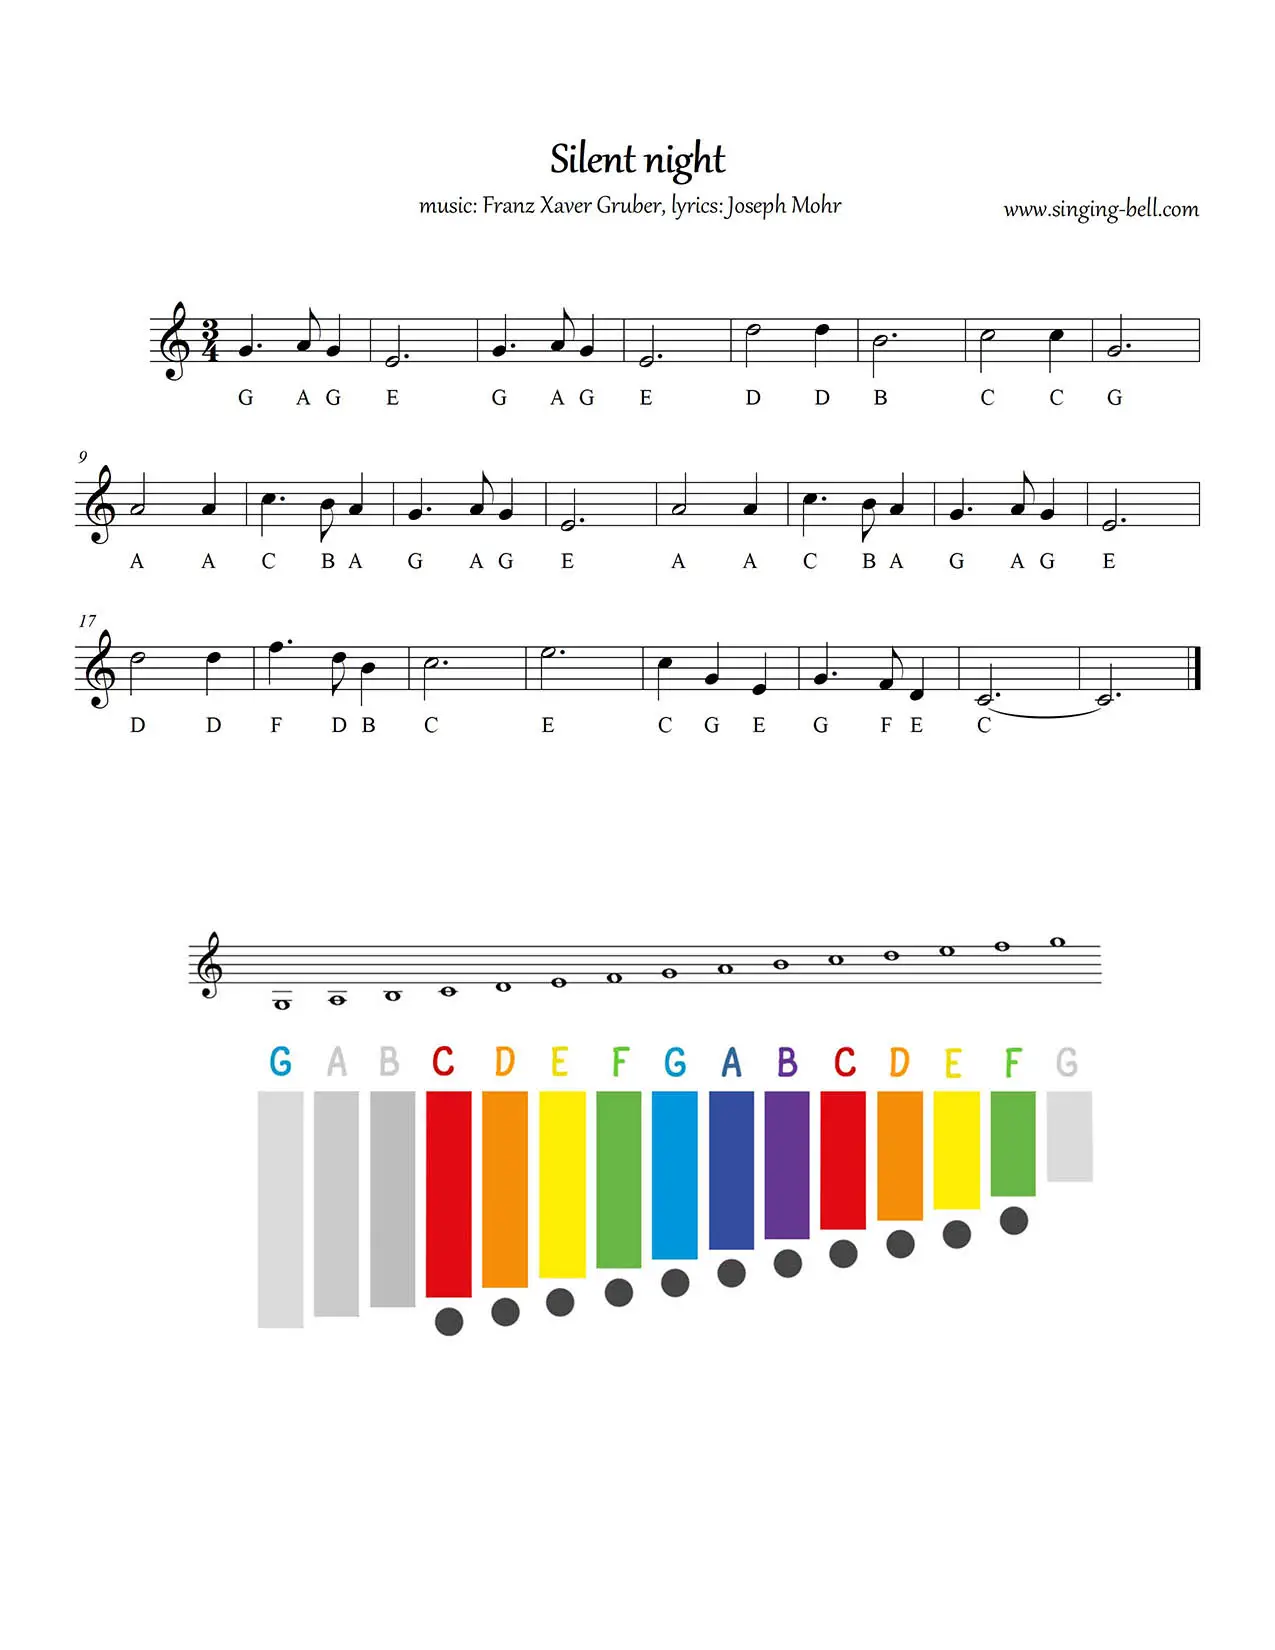 Silent night free glockenspiel sheet music notes chart pdf